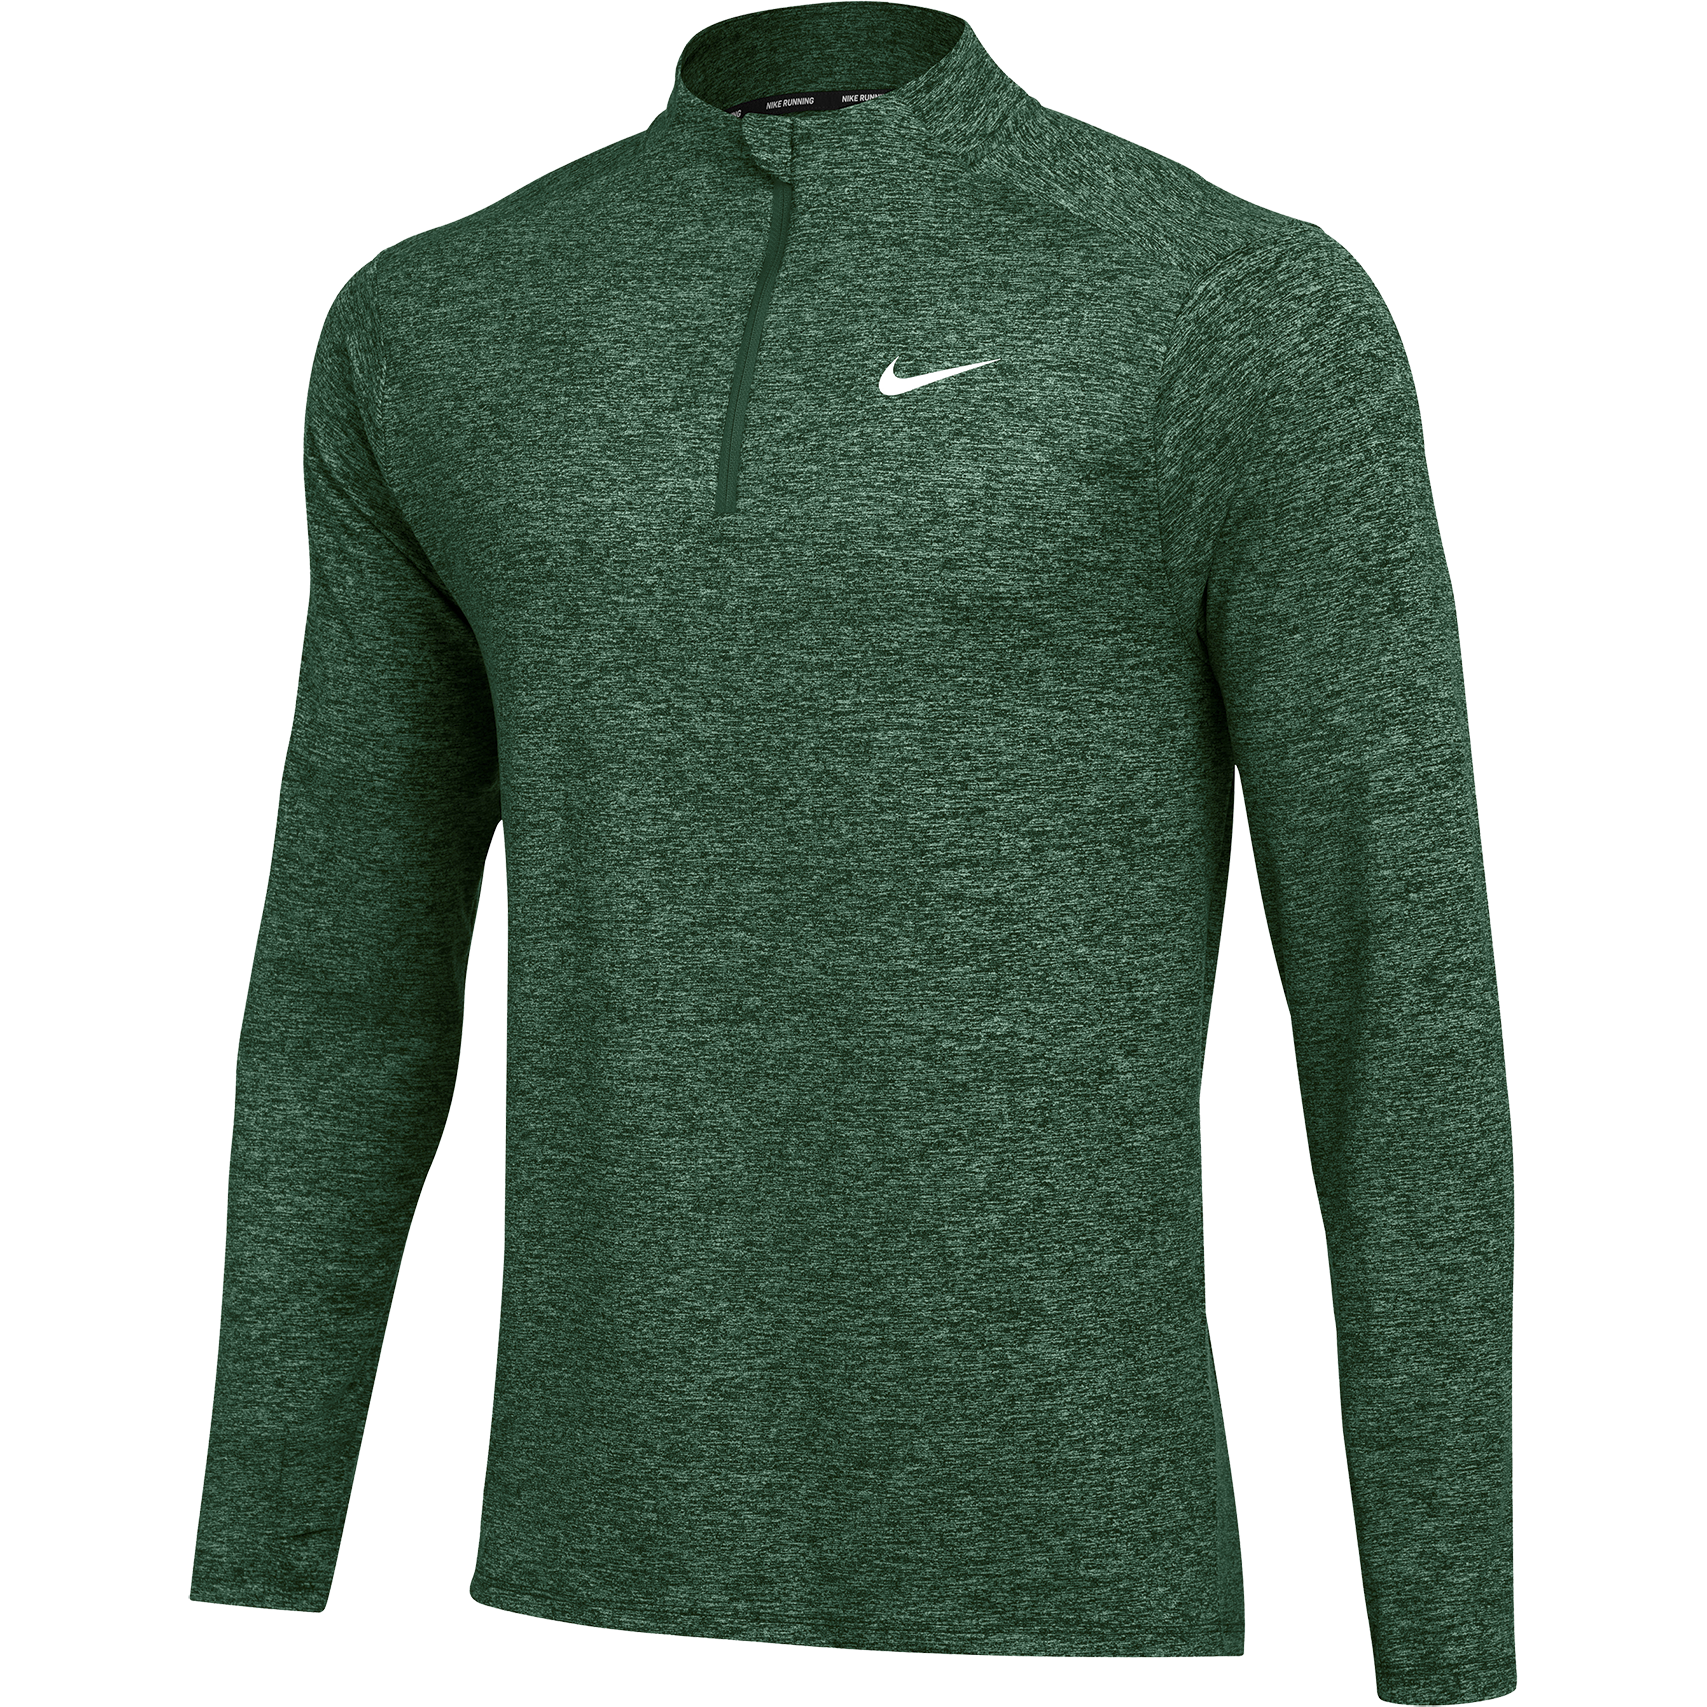 Nike-Men's Nike Dri-FIT Element 1/2 Zip Top-Dark Green Heather-Pacers Running